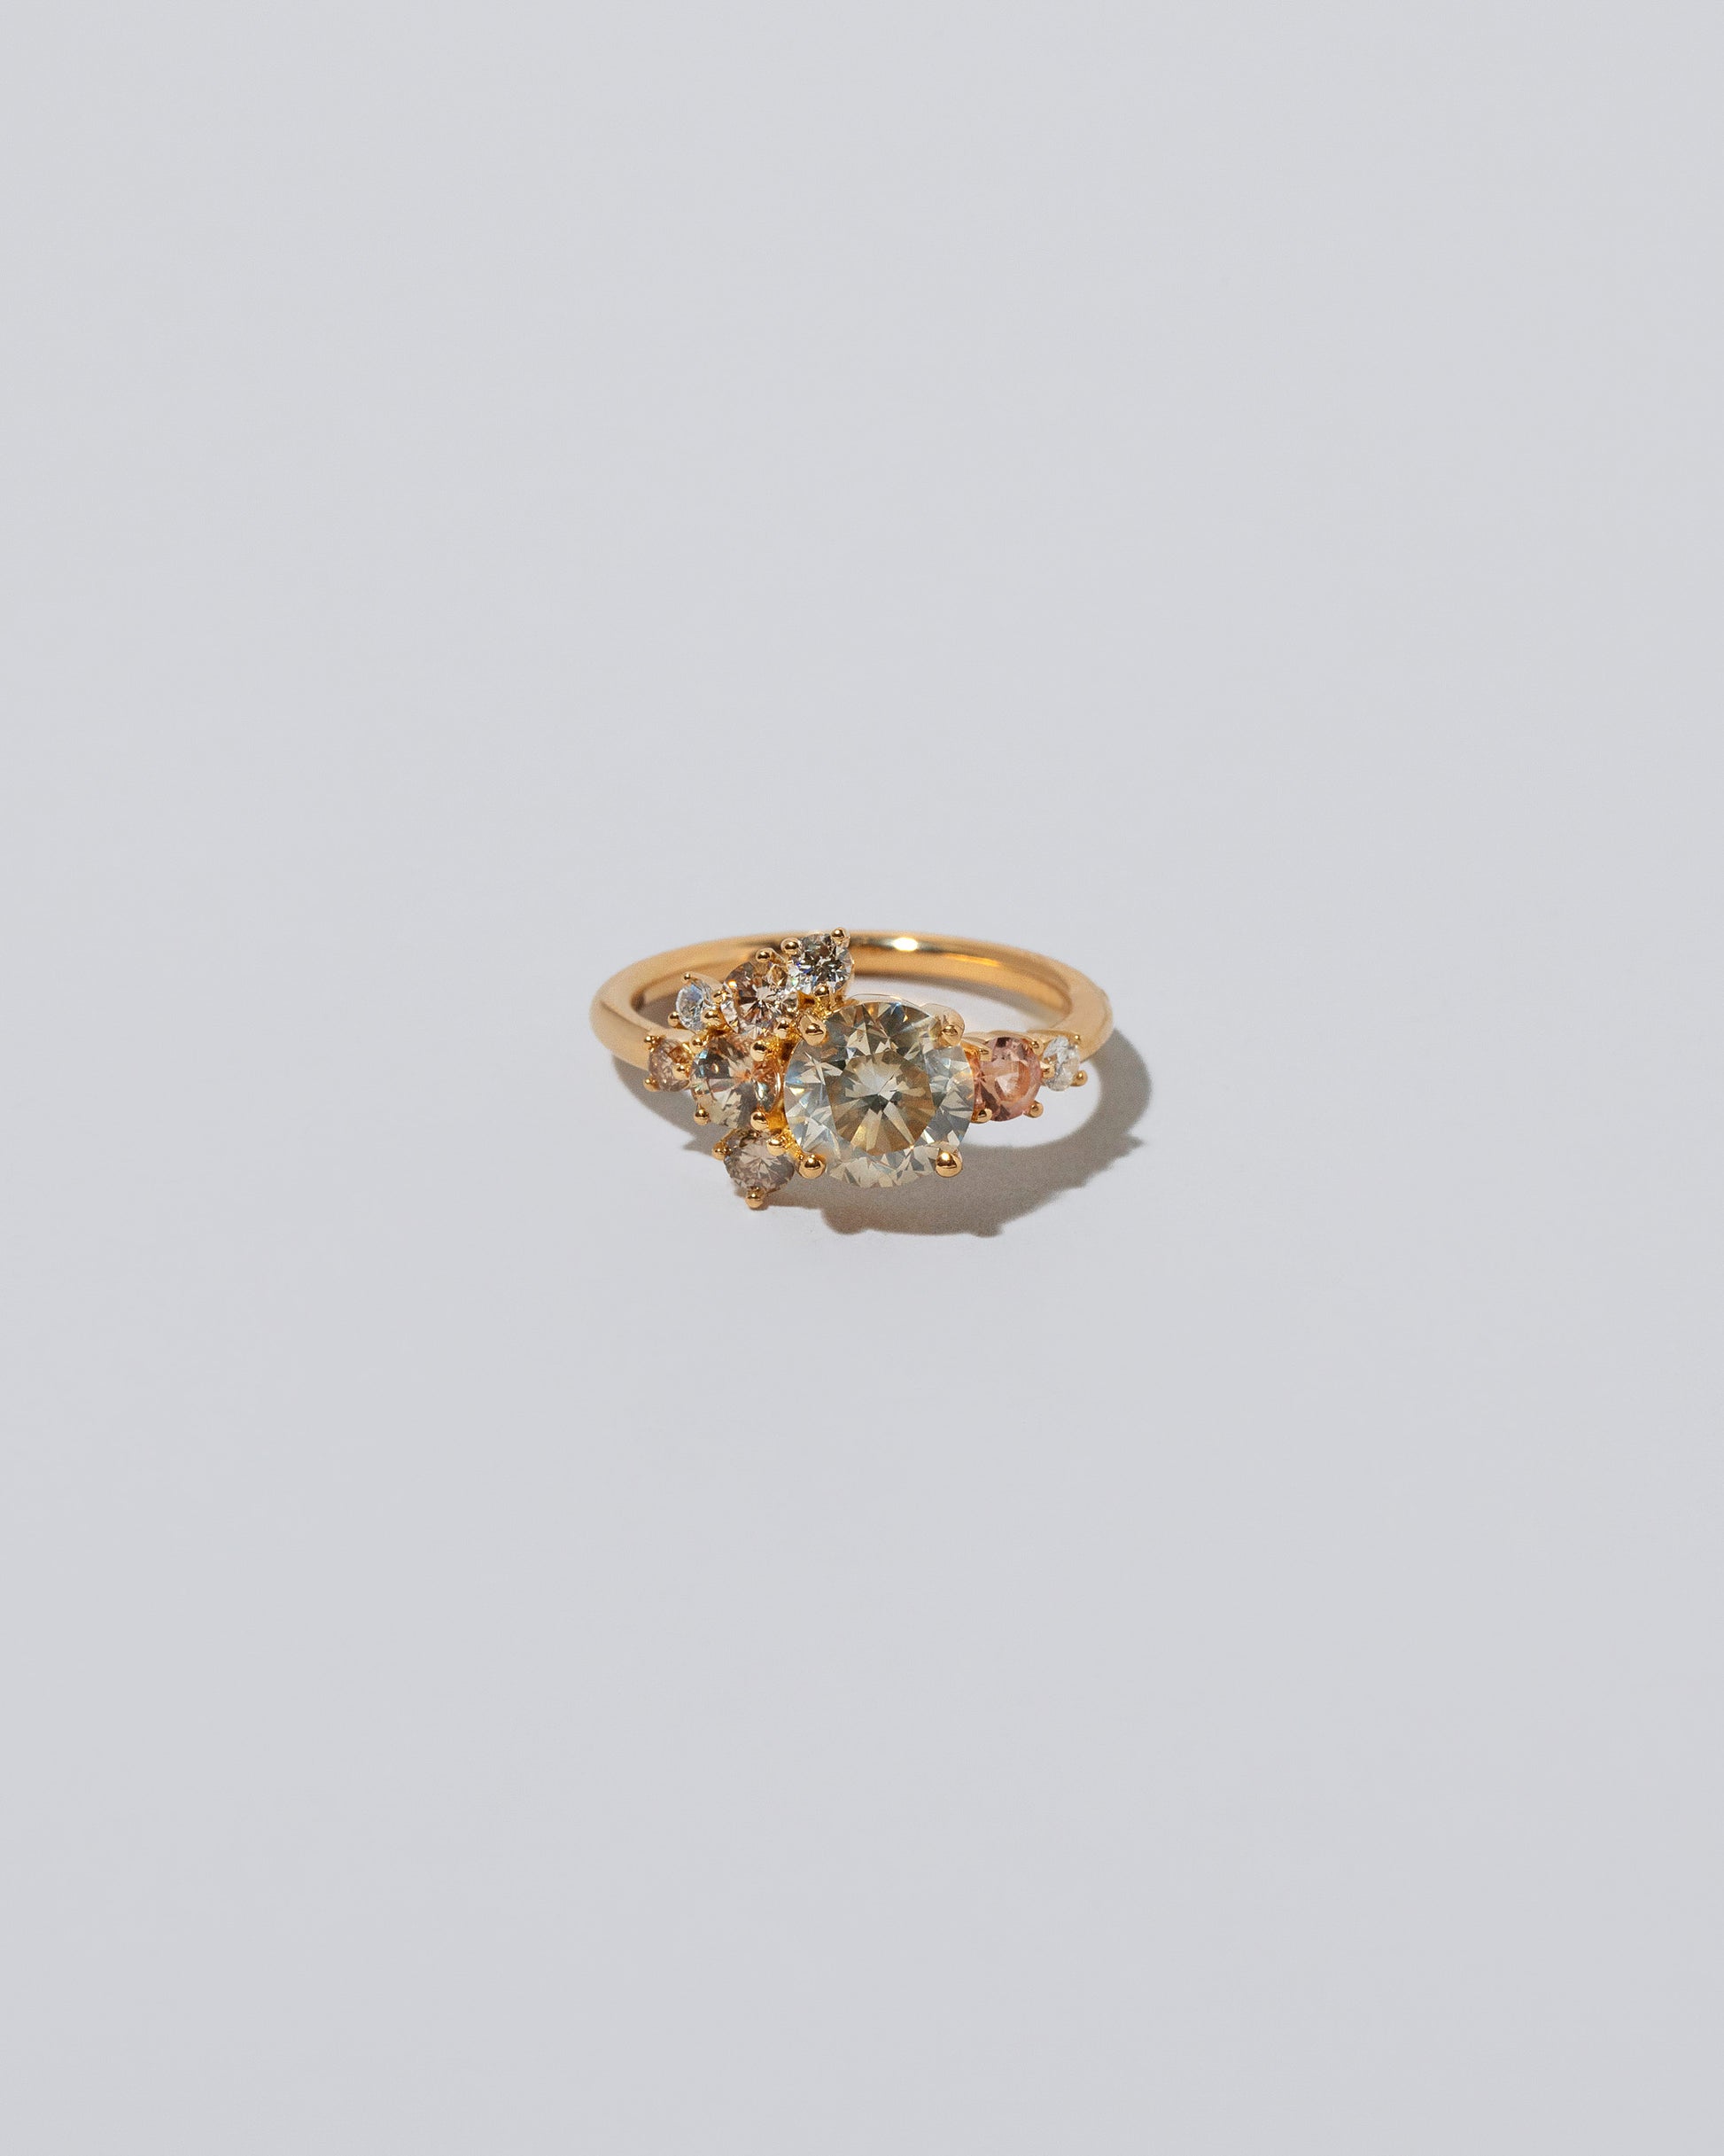 Vega Ring - Champagne Diamond on light colored background.